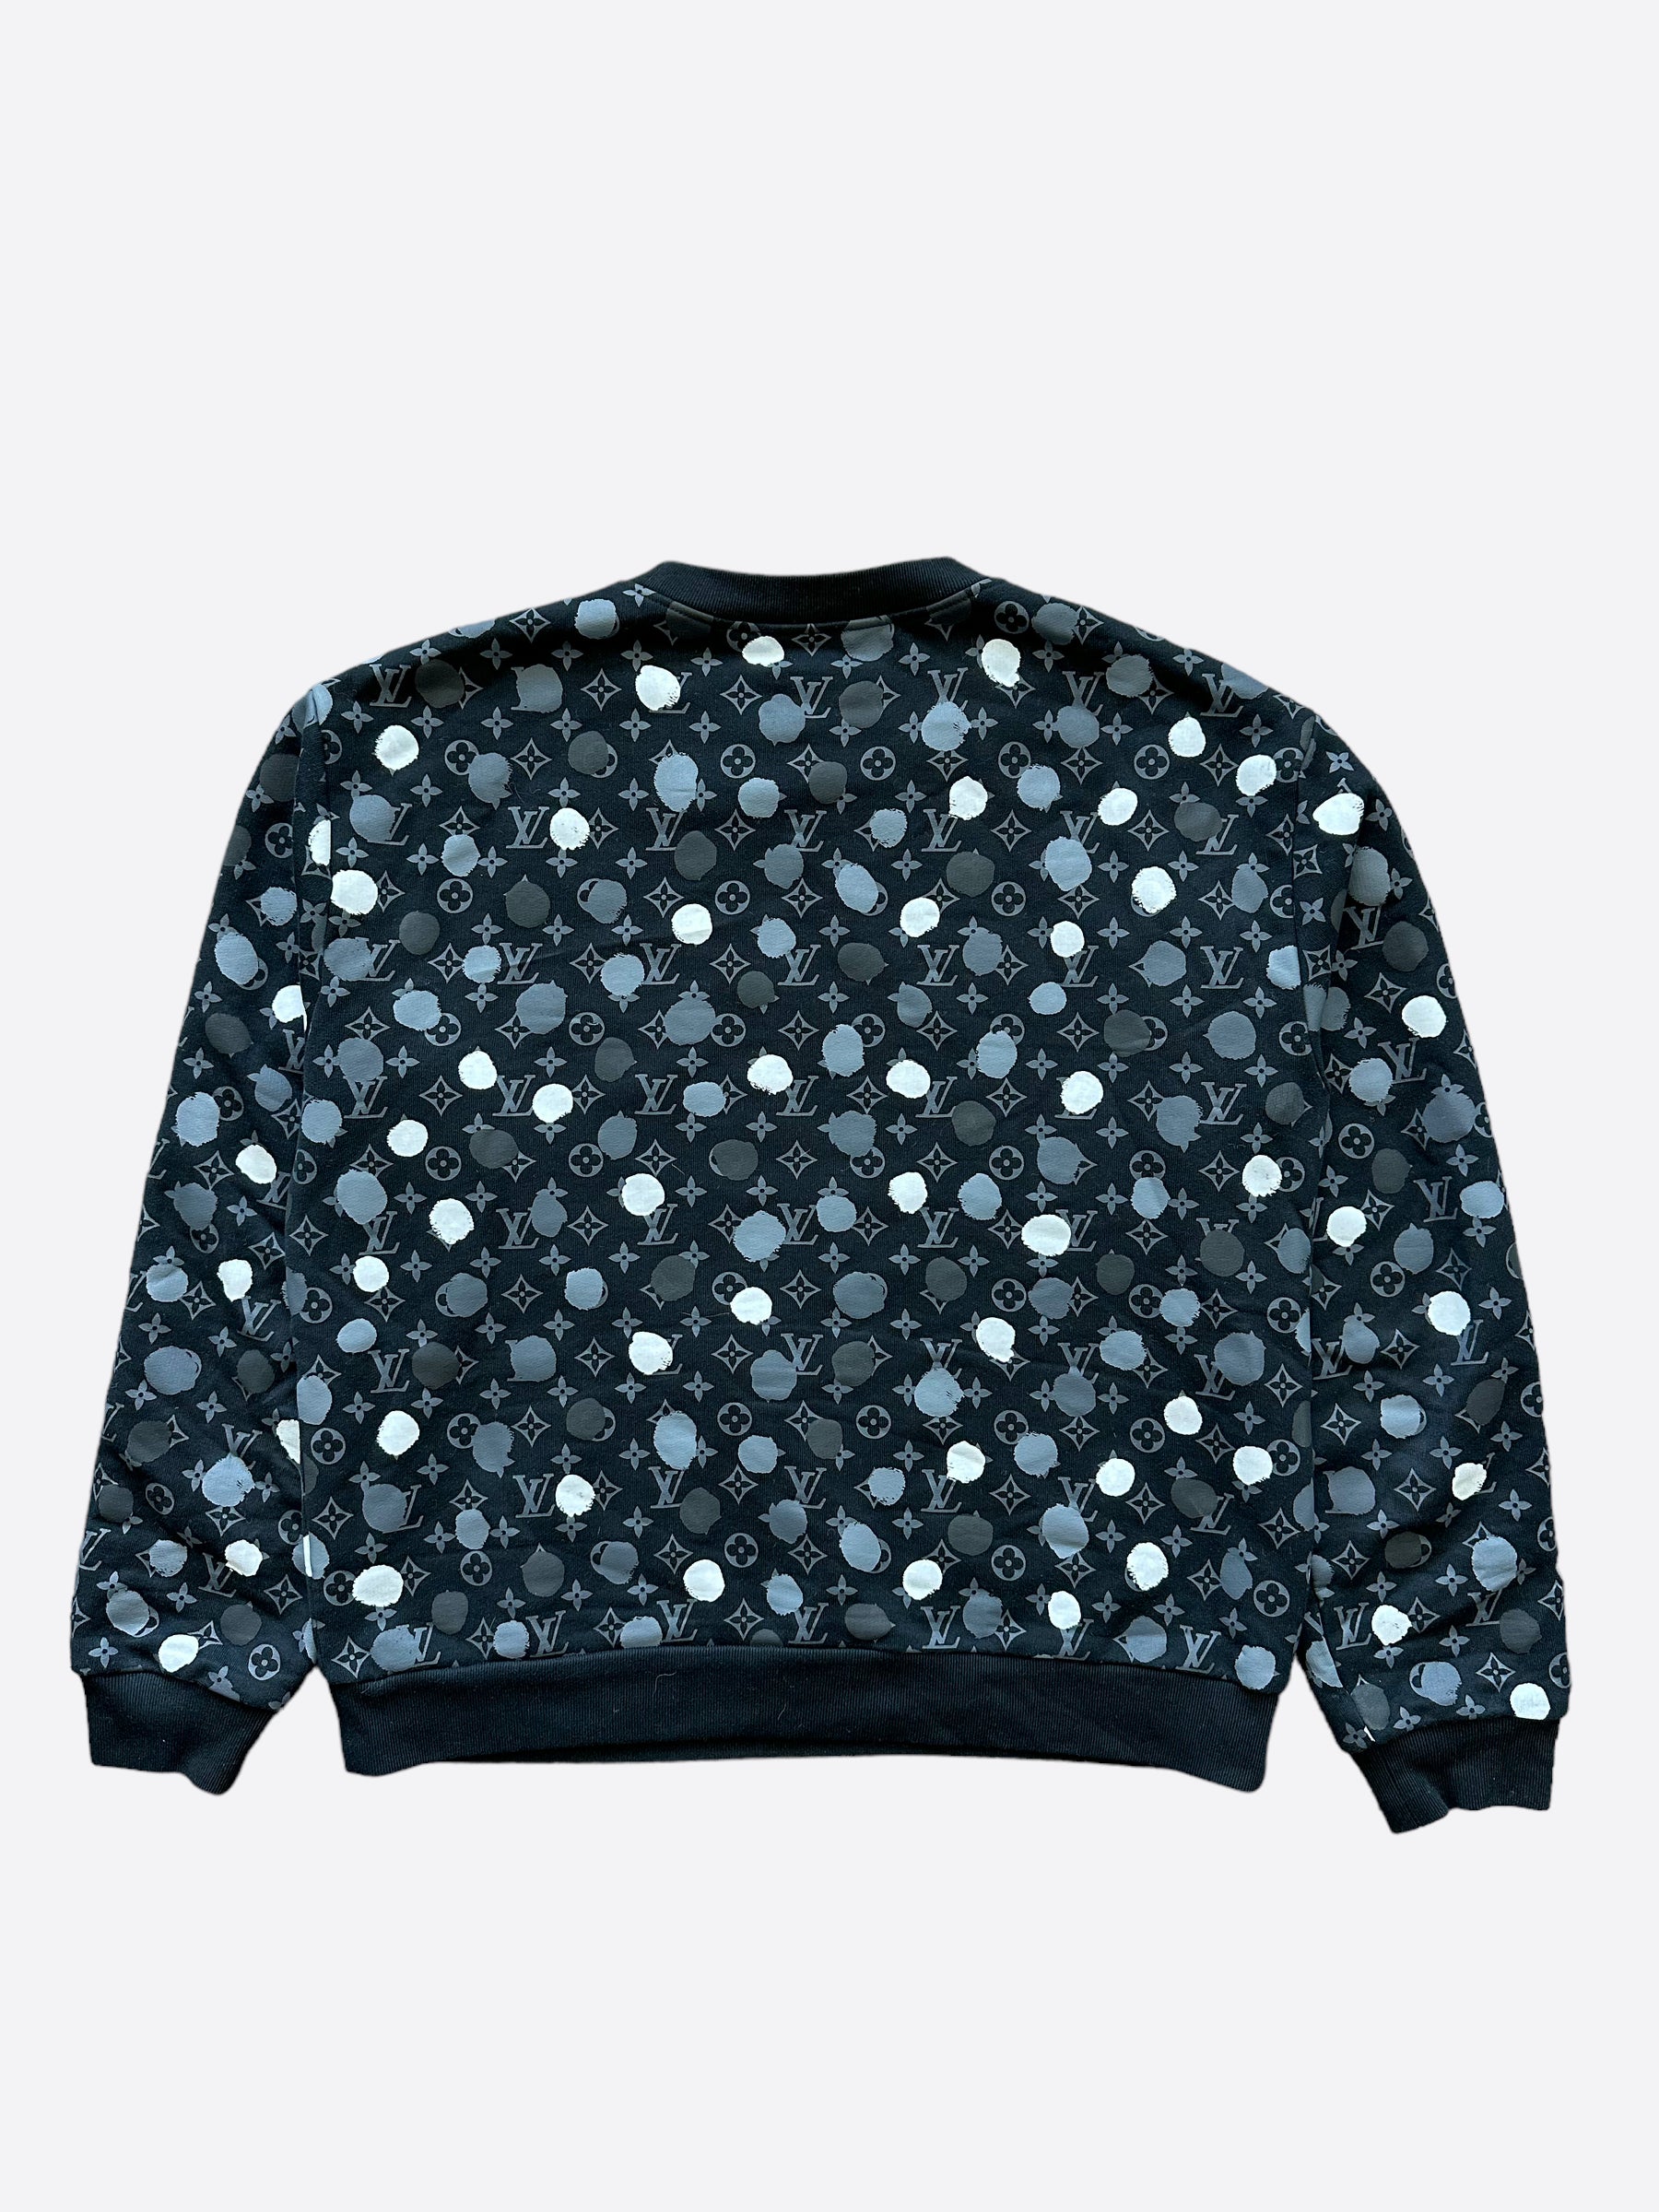 vuitton black monogram sweater